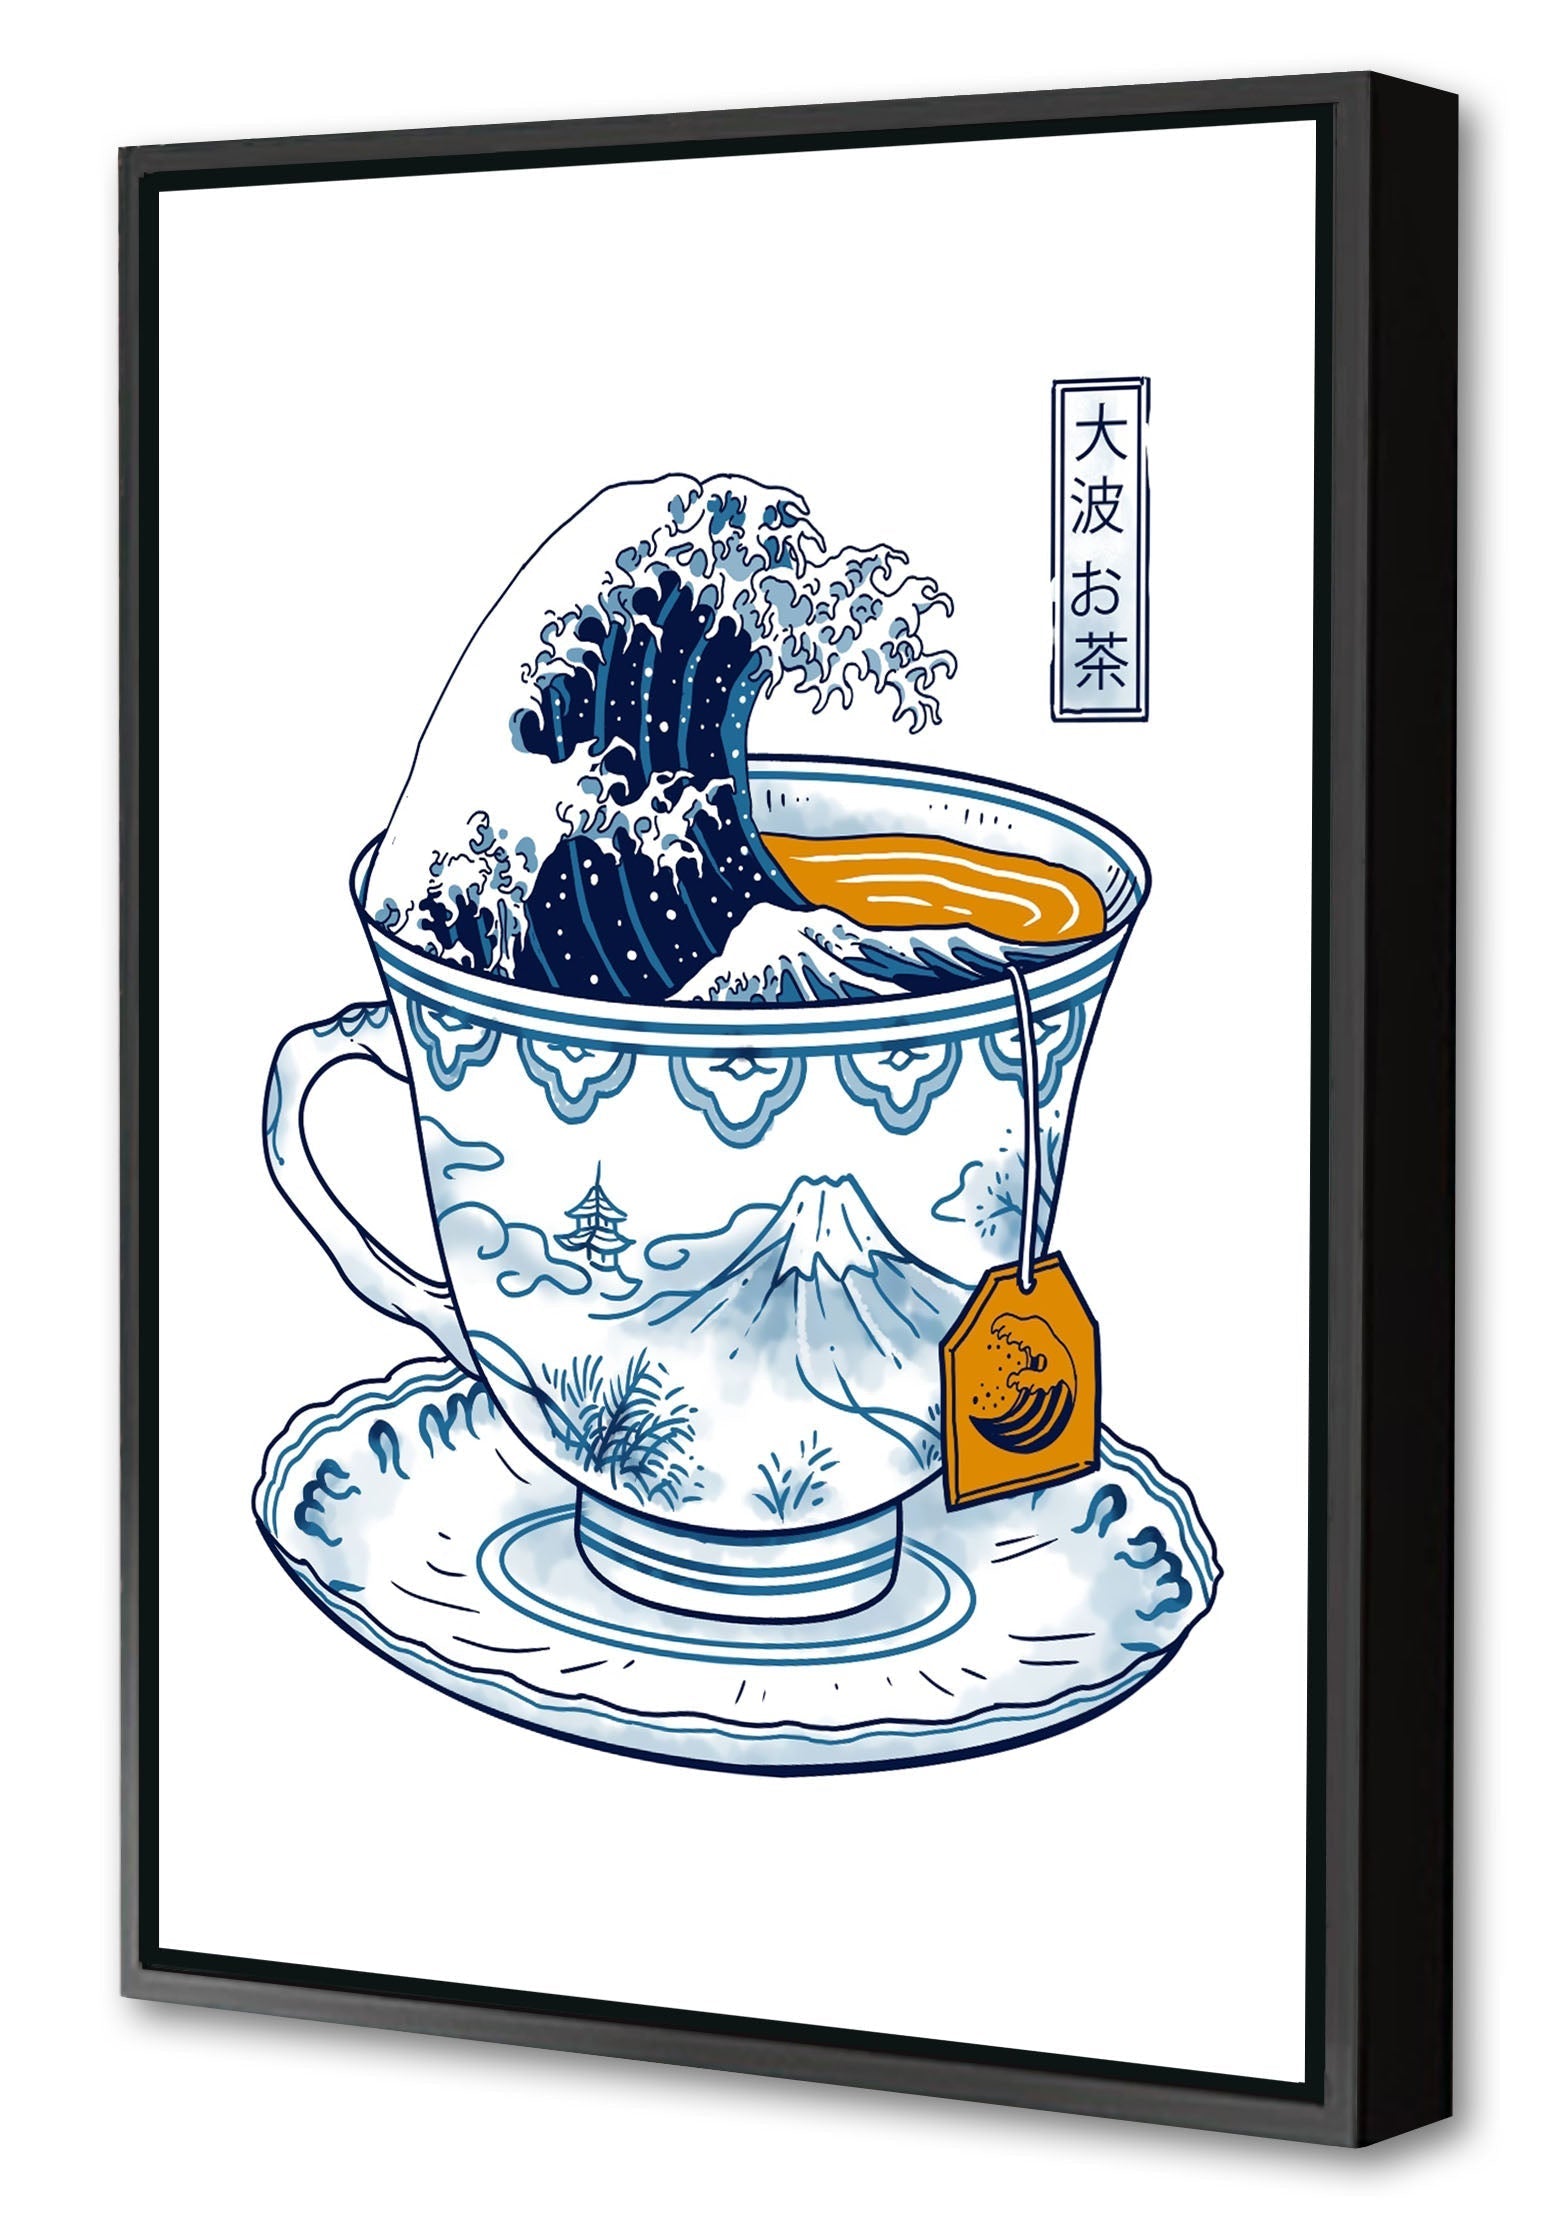 Great Kanagawa Tea-print, vincent-trinidad-Canvas Print with Box Frame-40 x 60 cm-BLUE SHAKER